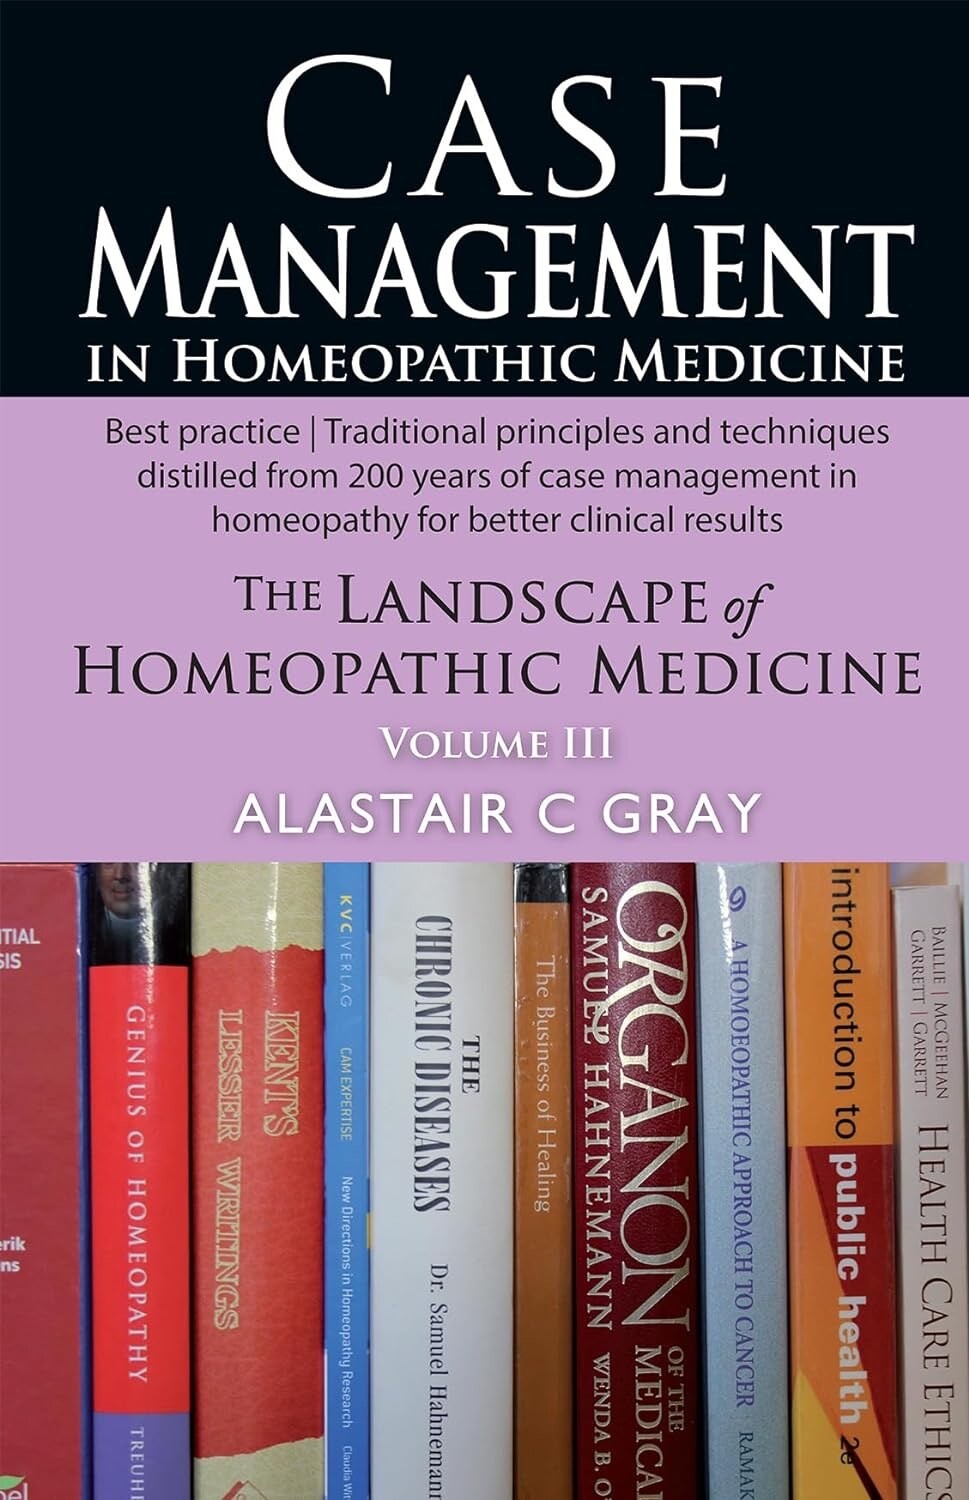 Case Management in Homeopathic Medicine Volume 3 (Alastair Gray)